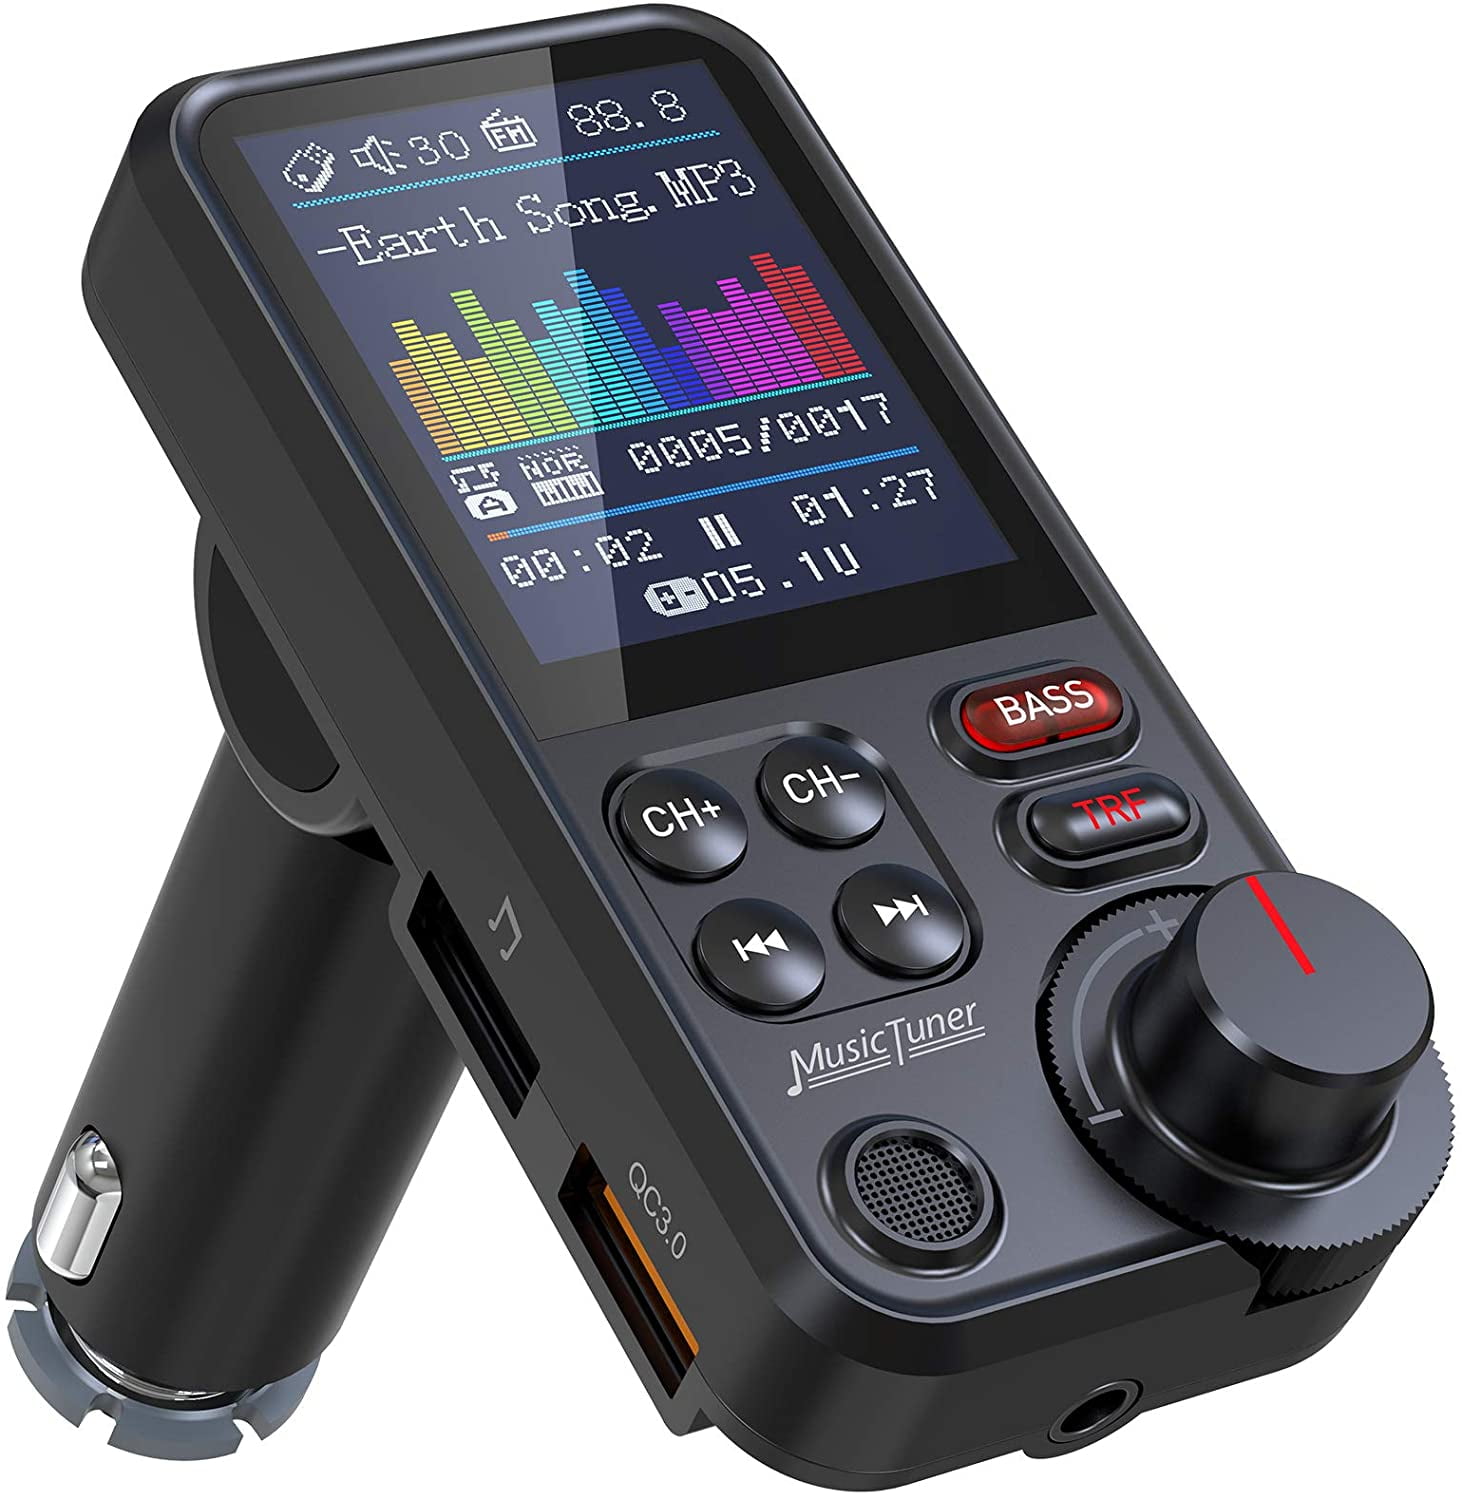 SKYKHLW FM Bluetooth Transmitter for car, Bluetooth Car Adapter